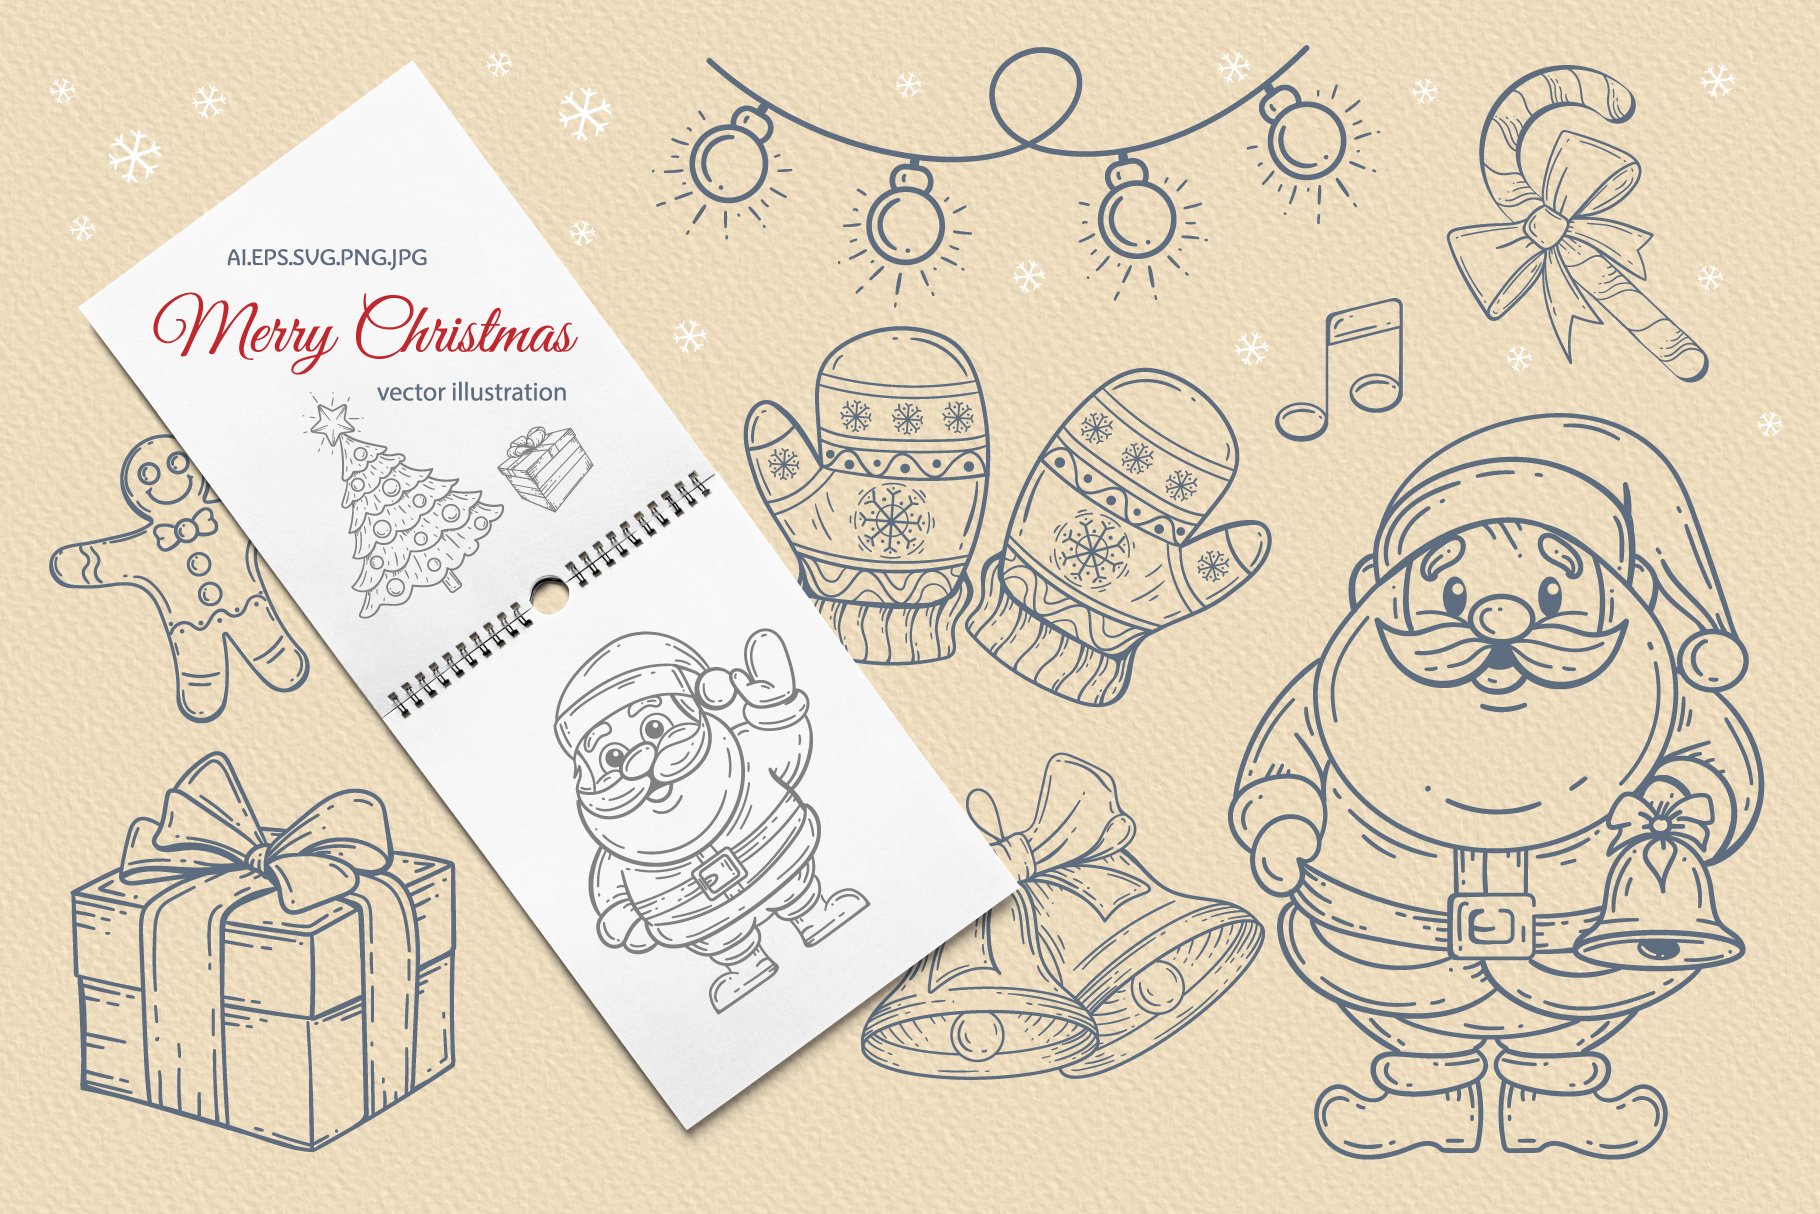 40 Christmas Drawing Ideas: Creative Inspiration for Season